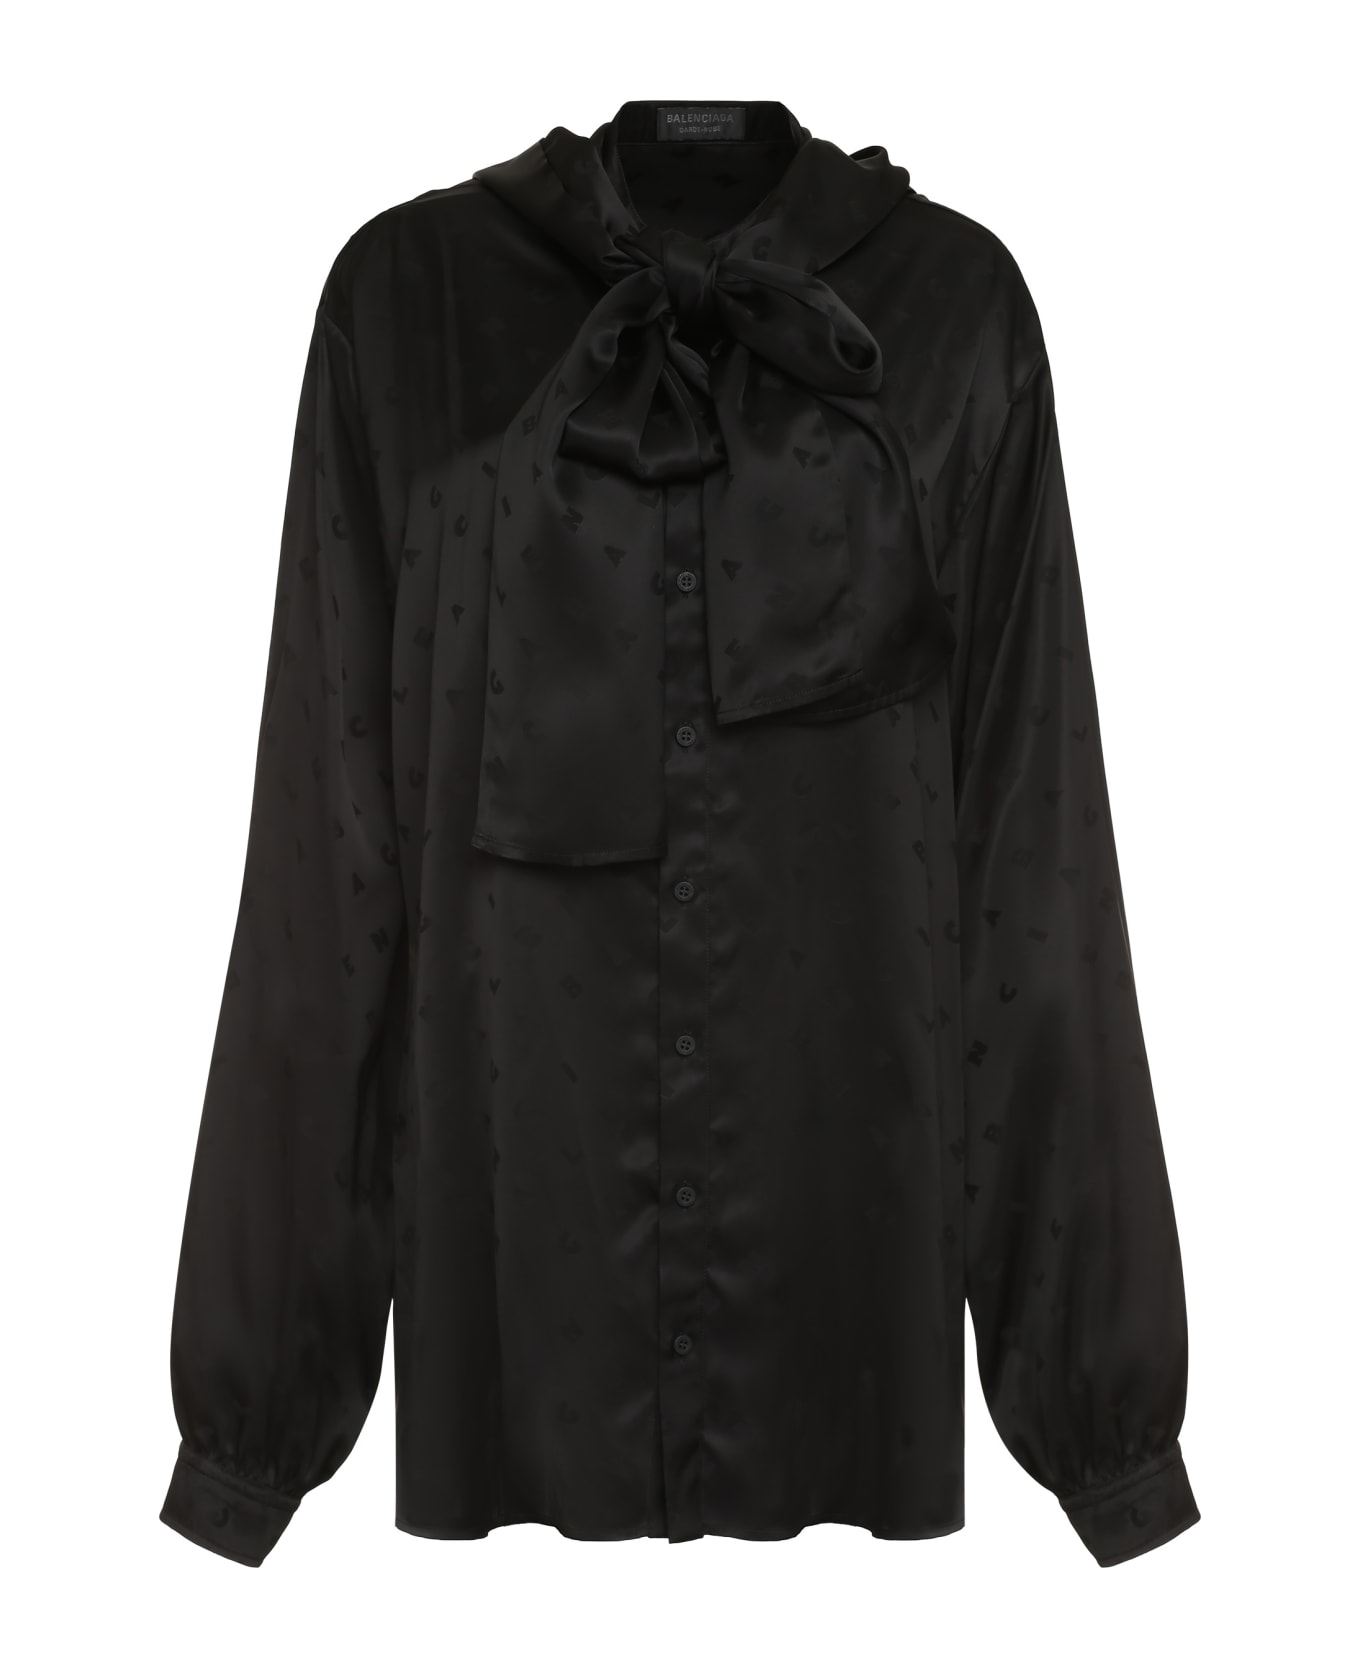 Balenciaga Jacquard Shirt - black